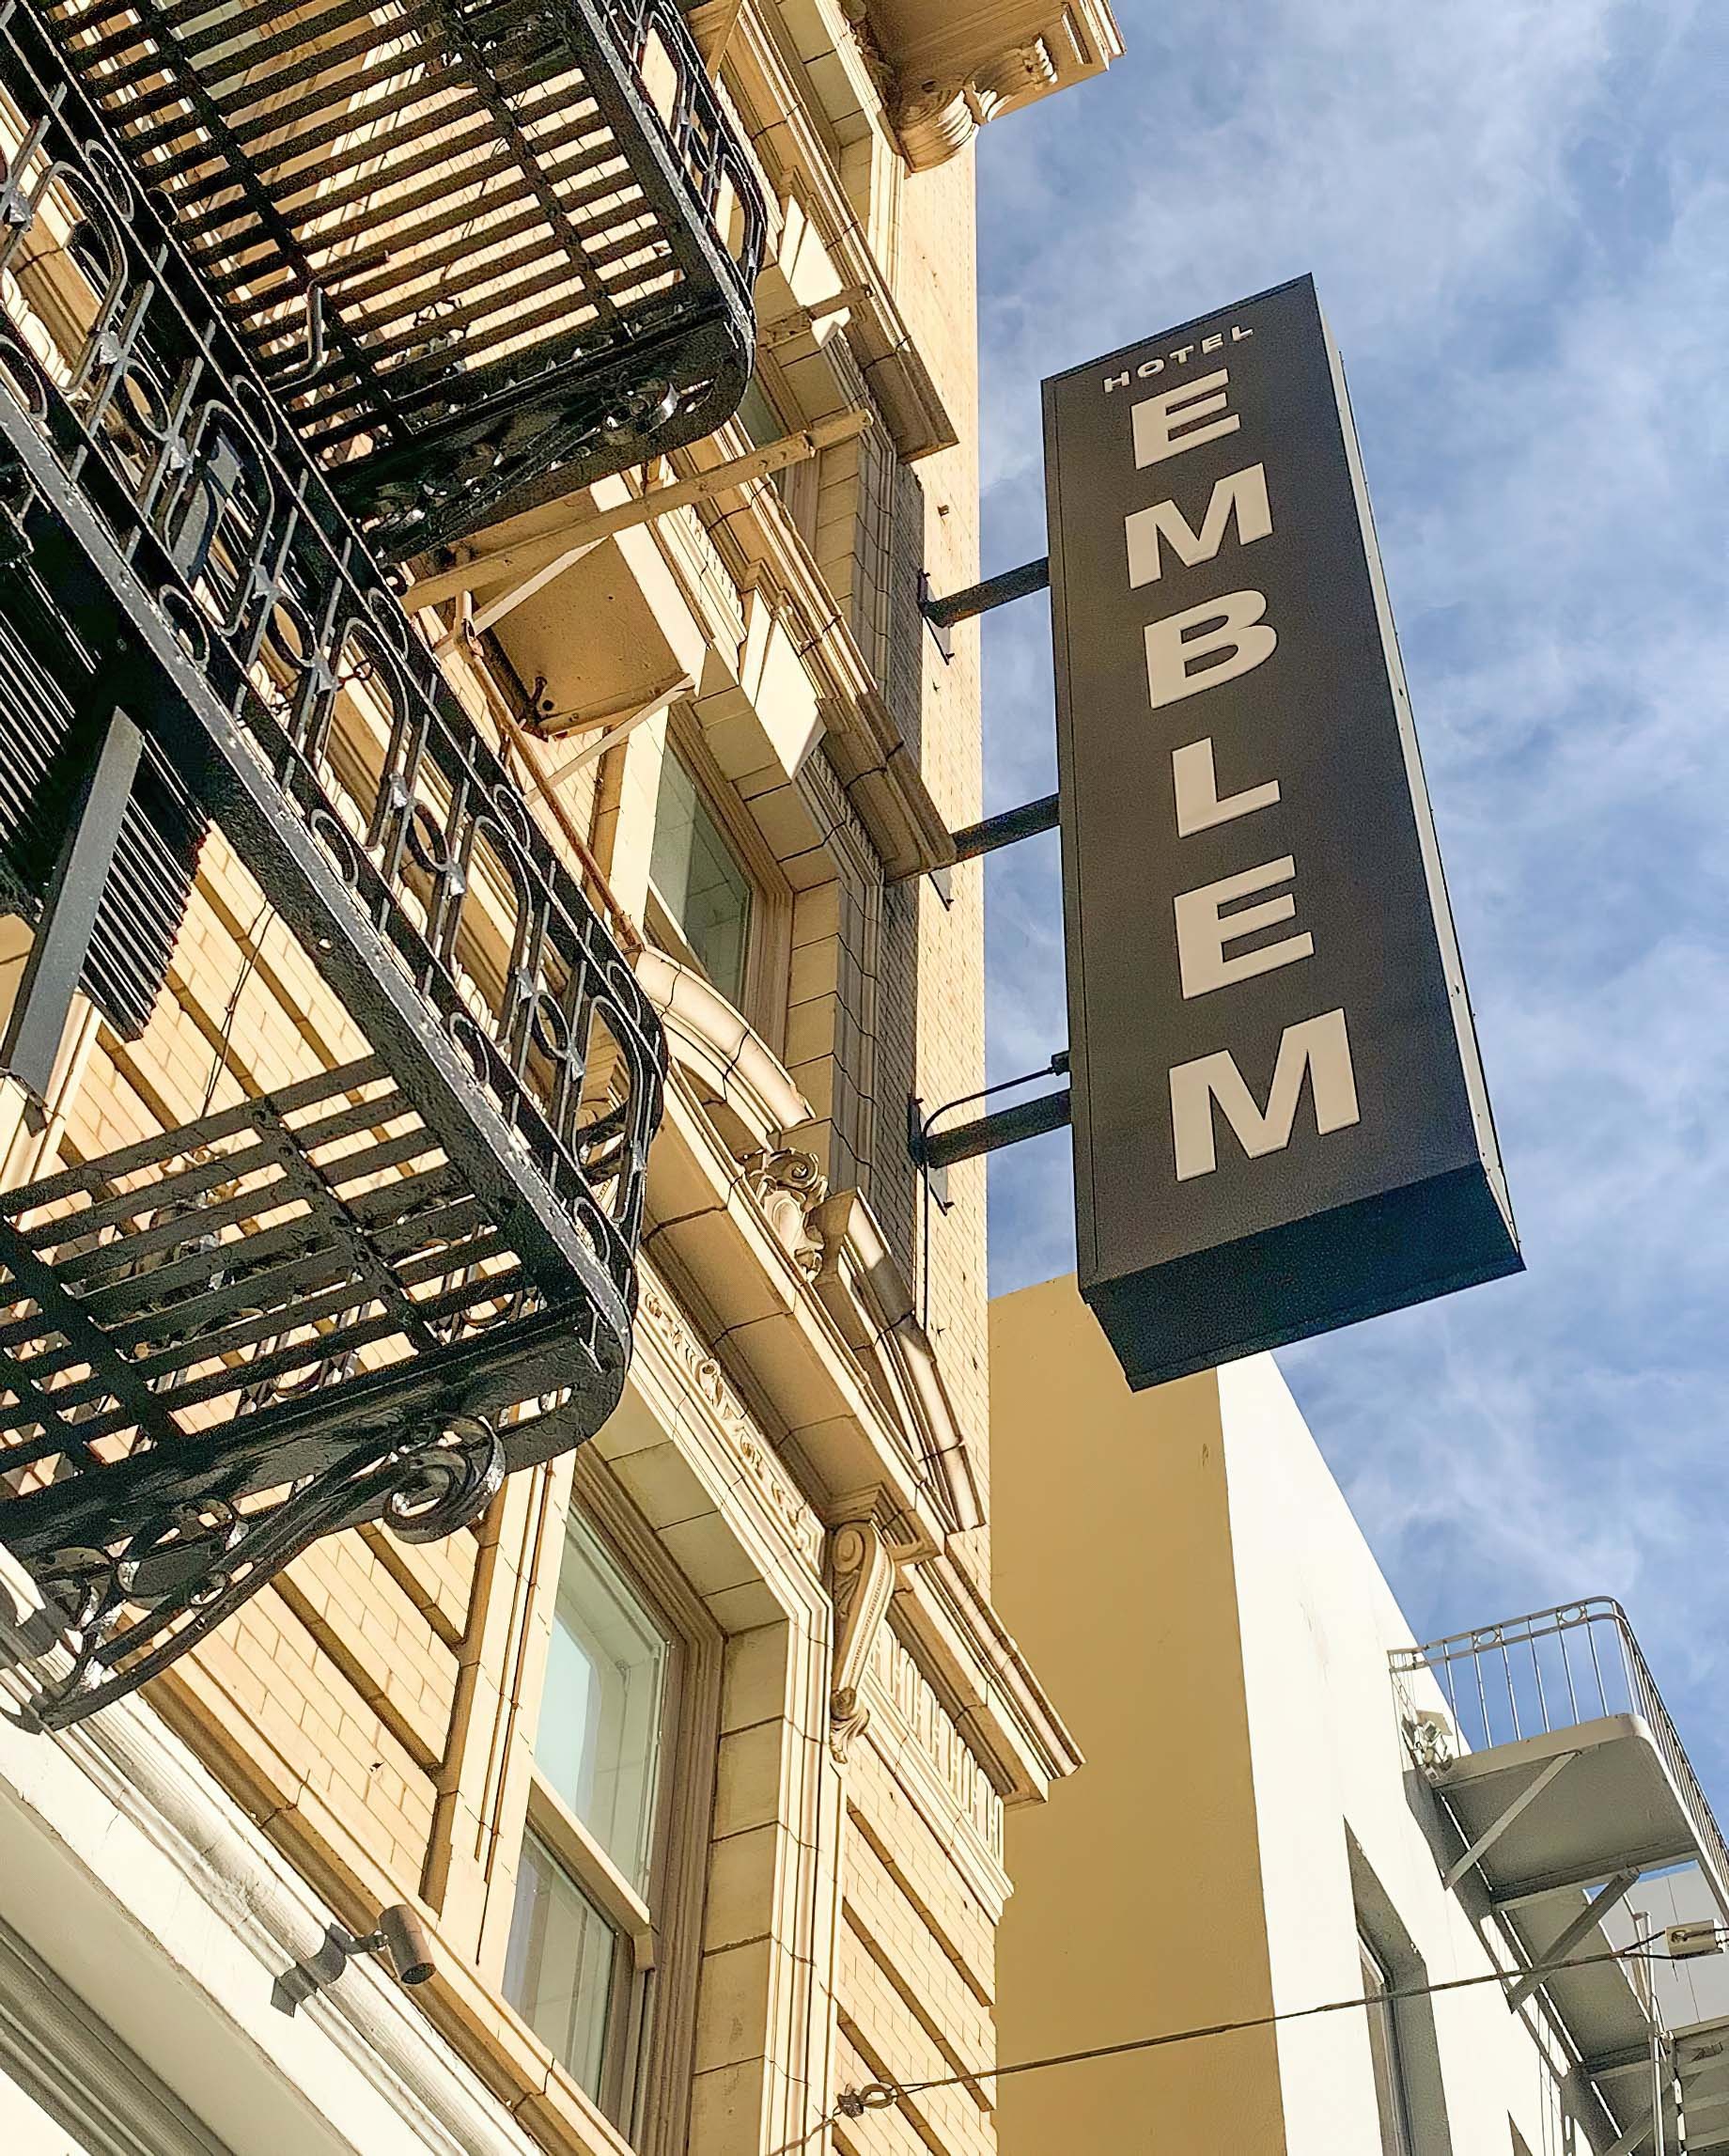 Hotel Emblem, a Viceroy Urban Retreat - San Francisco, CA, USA - Exterior Sign